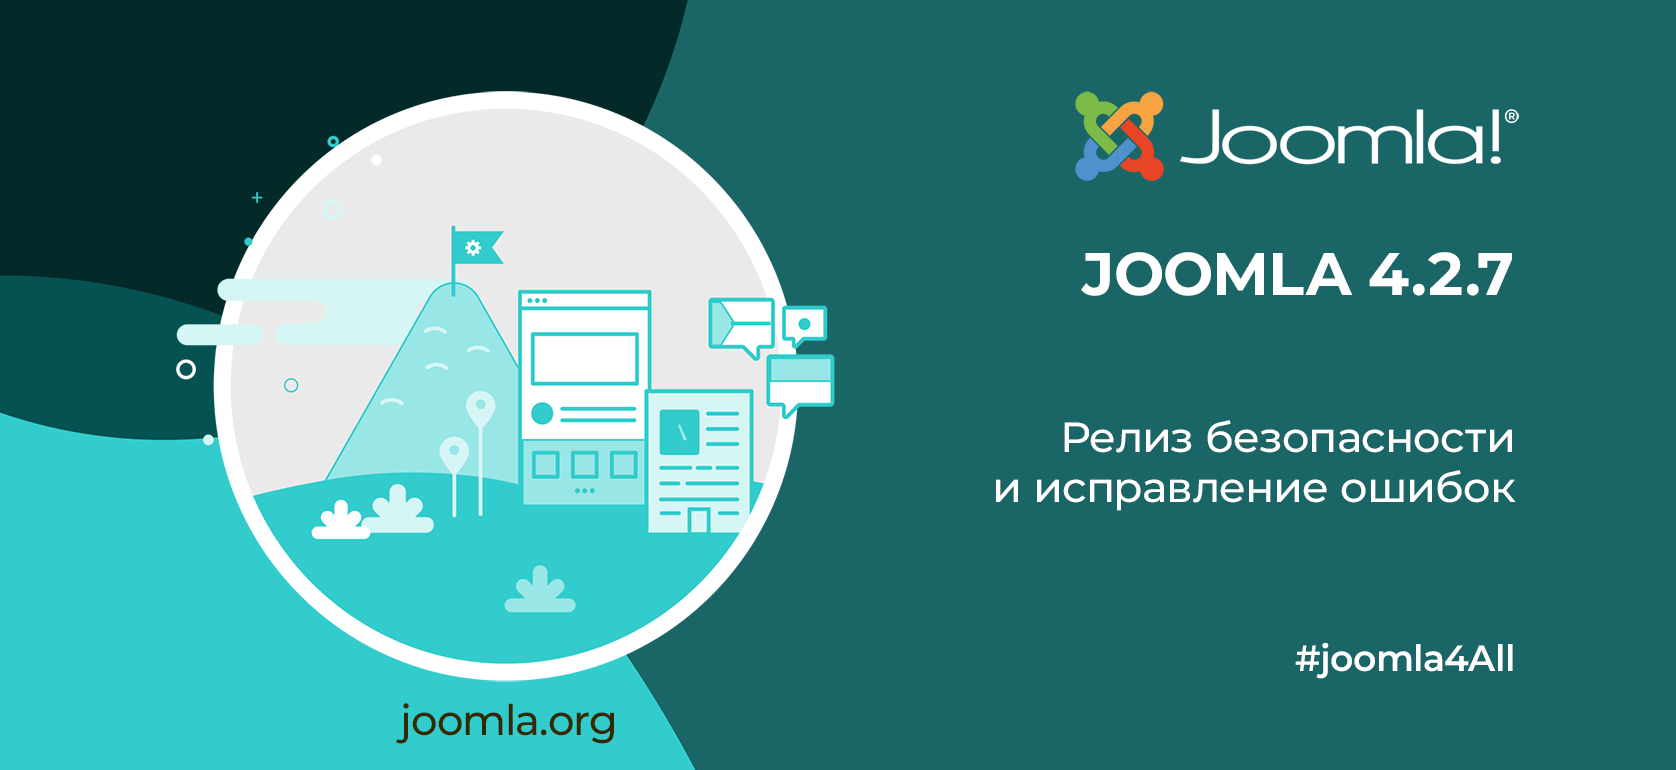 Вышел релиз безопасности Joomla 4.2.7